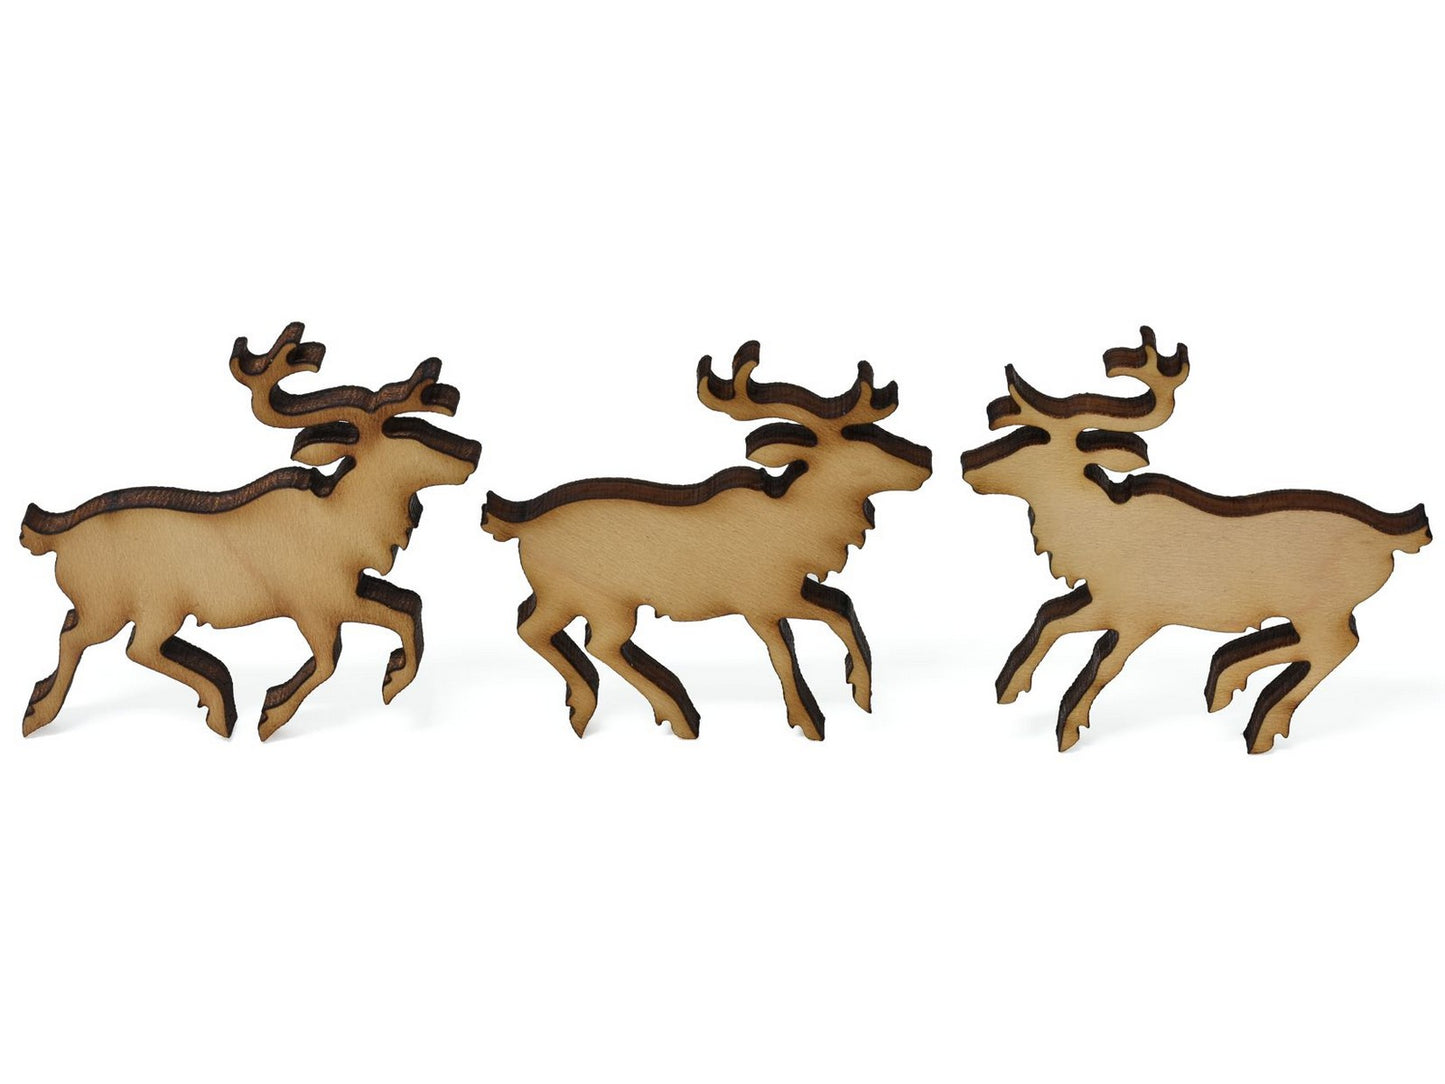 A closeup of pieces showing reindeer.